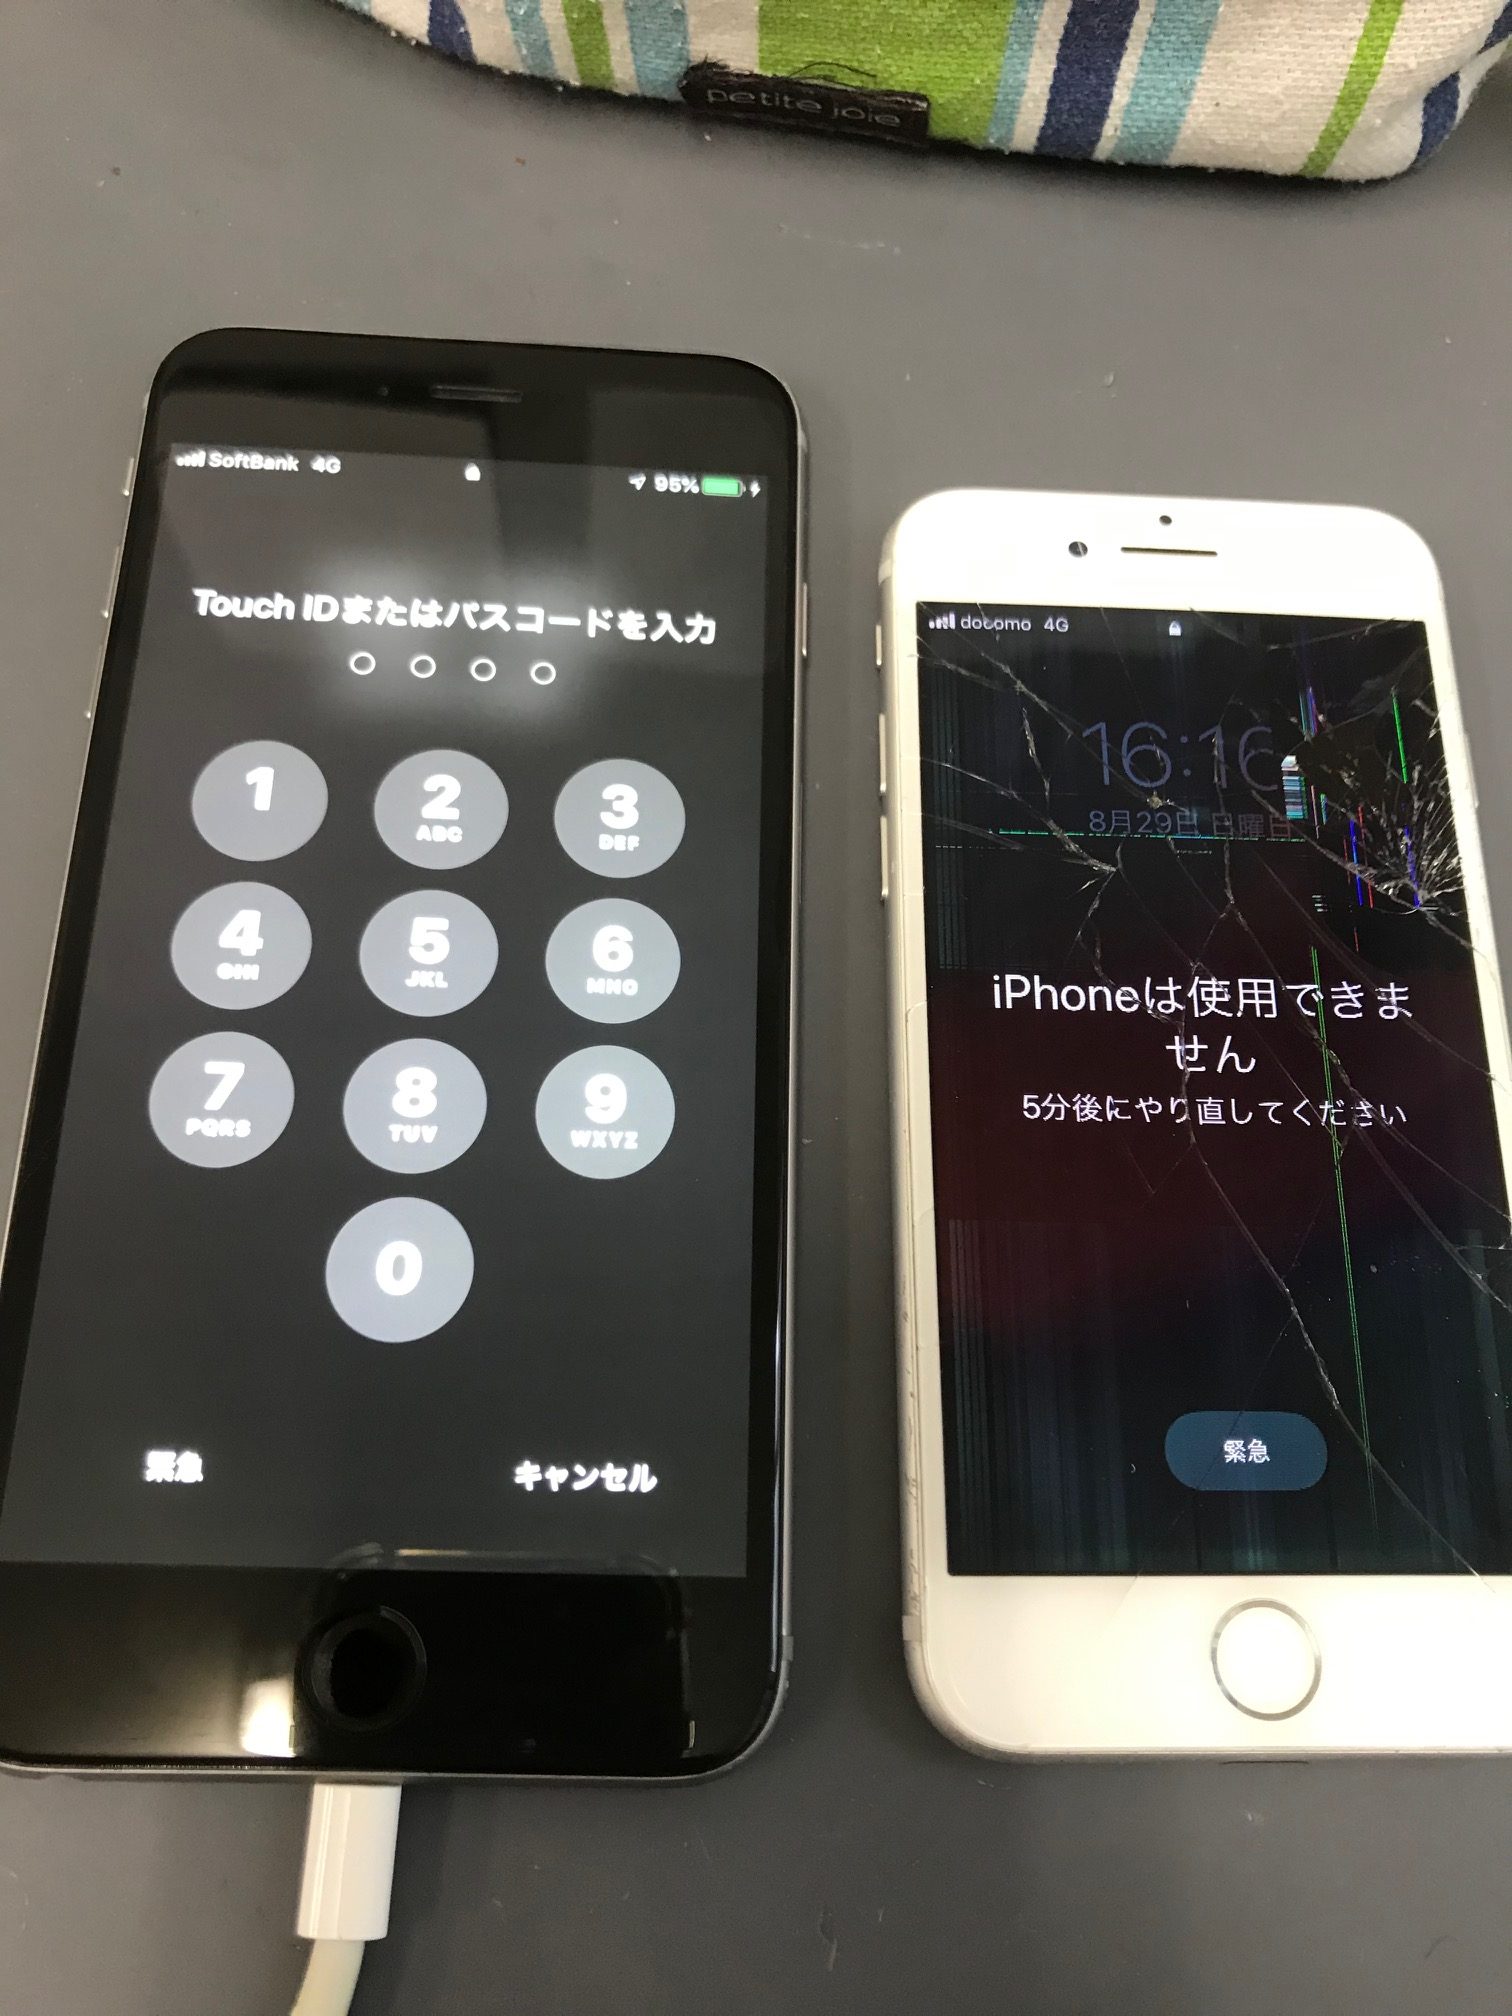 Iphoneのガラス割れや液晶破損は画面交換で即日修理 Iphone修理ジャパン渋谷店スタッフブログ